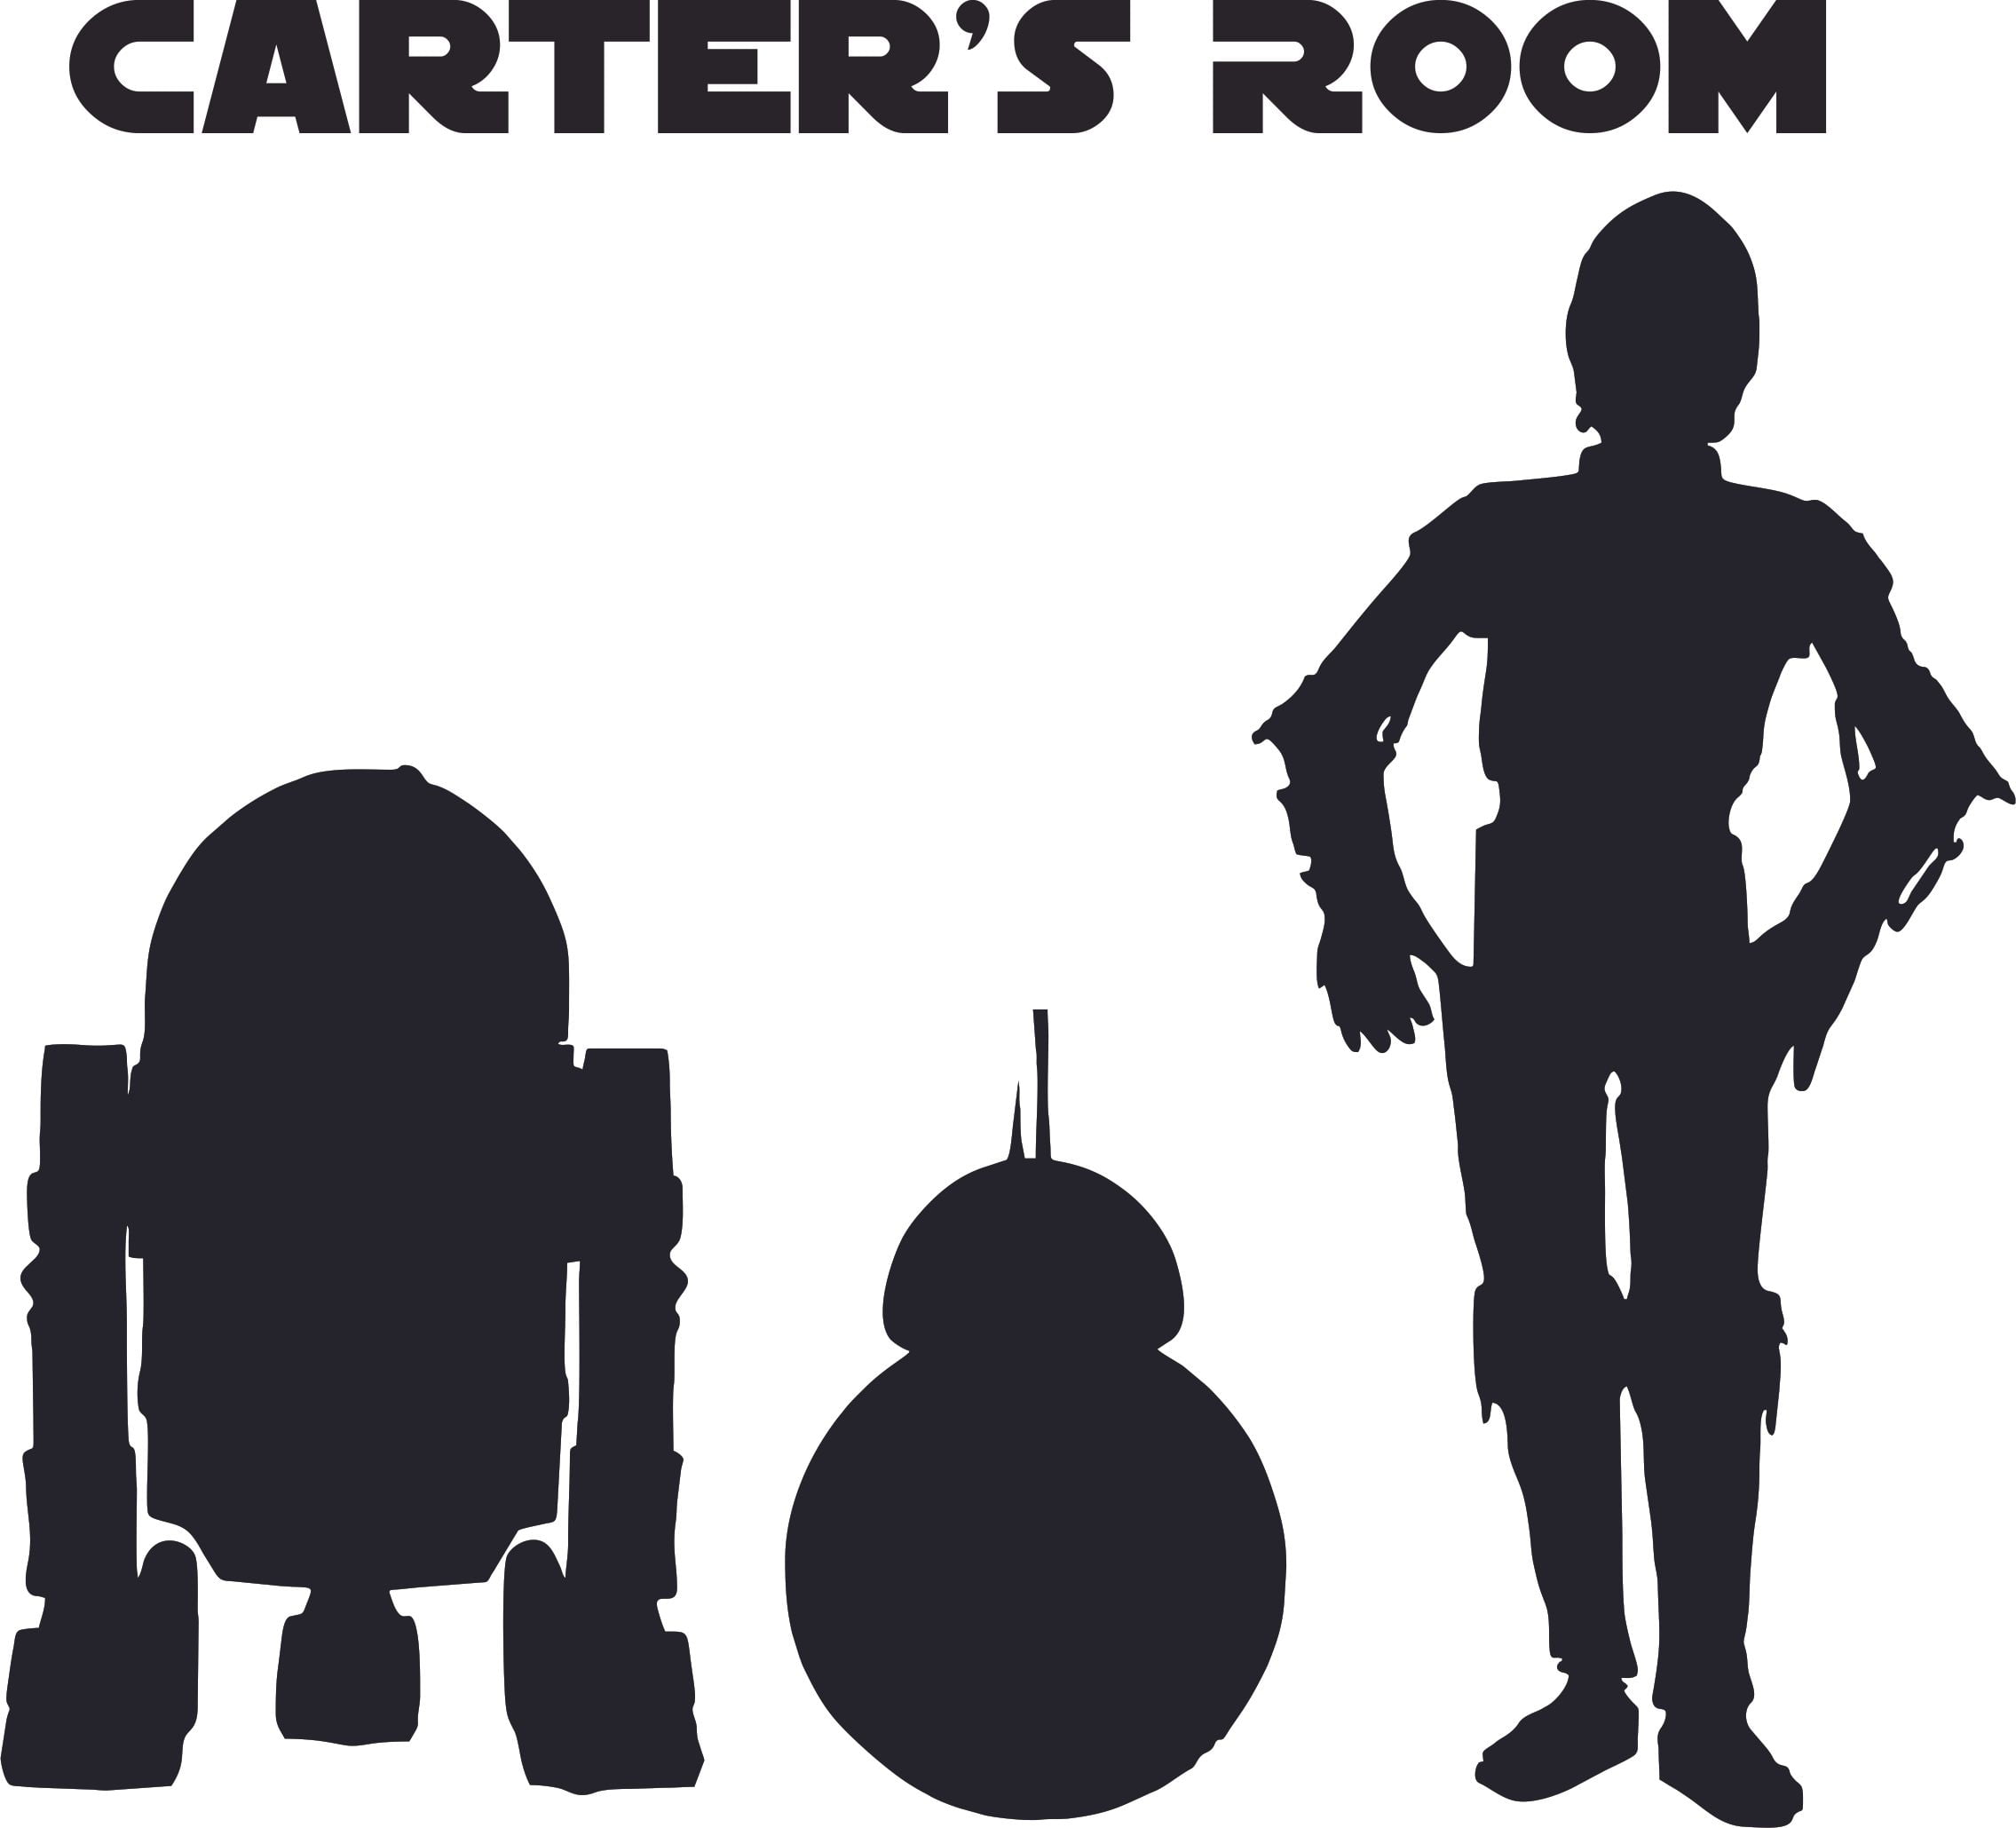 Star Wars Robot Clone Cartoon Character Design Customized Wall Art Vinyl  Decal - Custom Vinyl Wall Art - Personalized Name - Baby Girls Boy Bedroom  Decal Room Wall Sticker Decoration Size (10x8